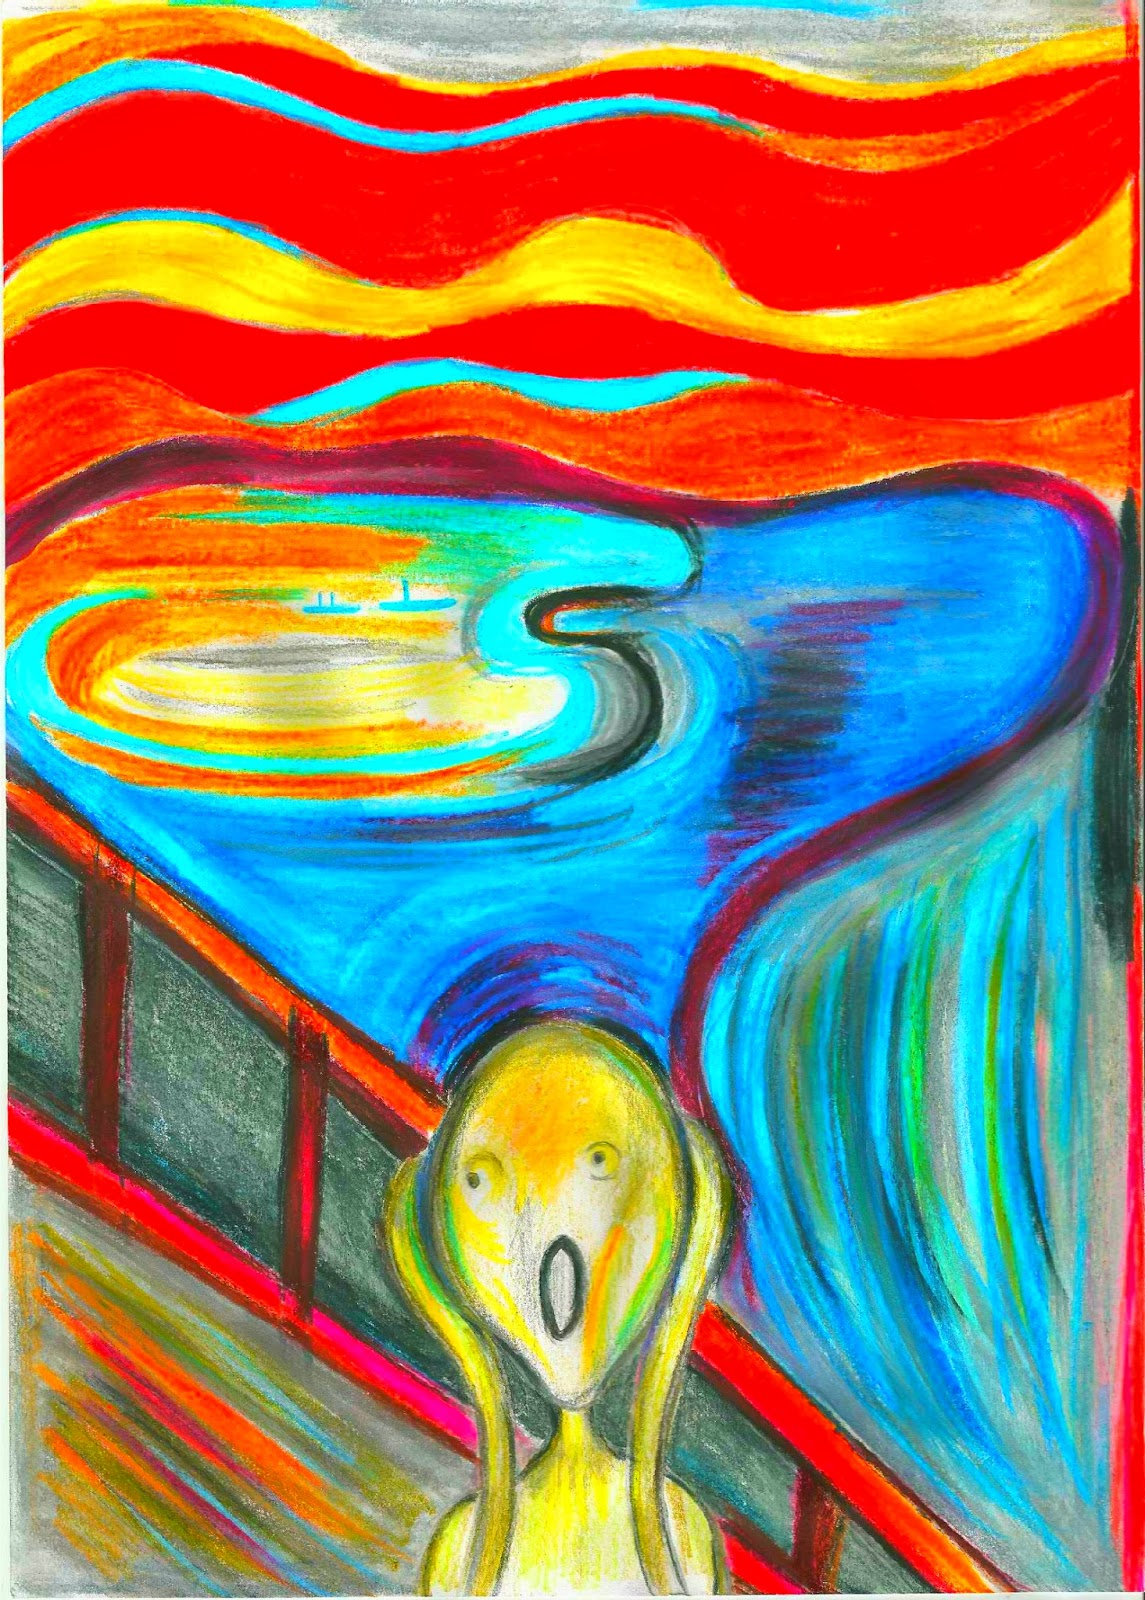 The Scream cartoon - now posted: The Scream - Edmund Munch inspired cartoon